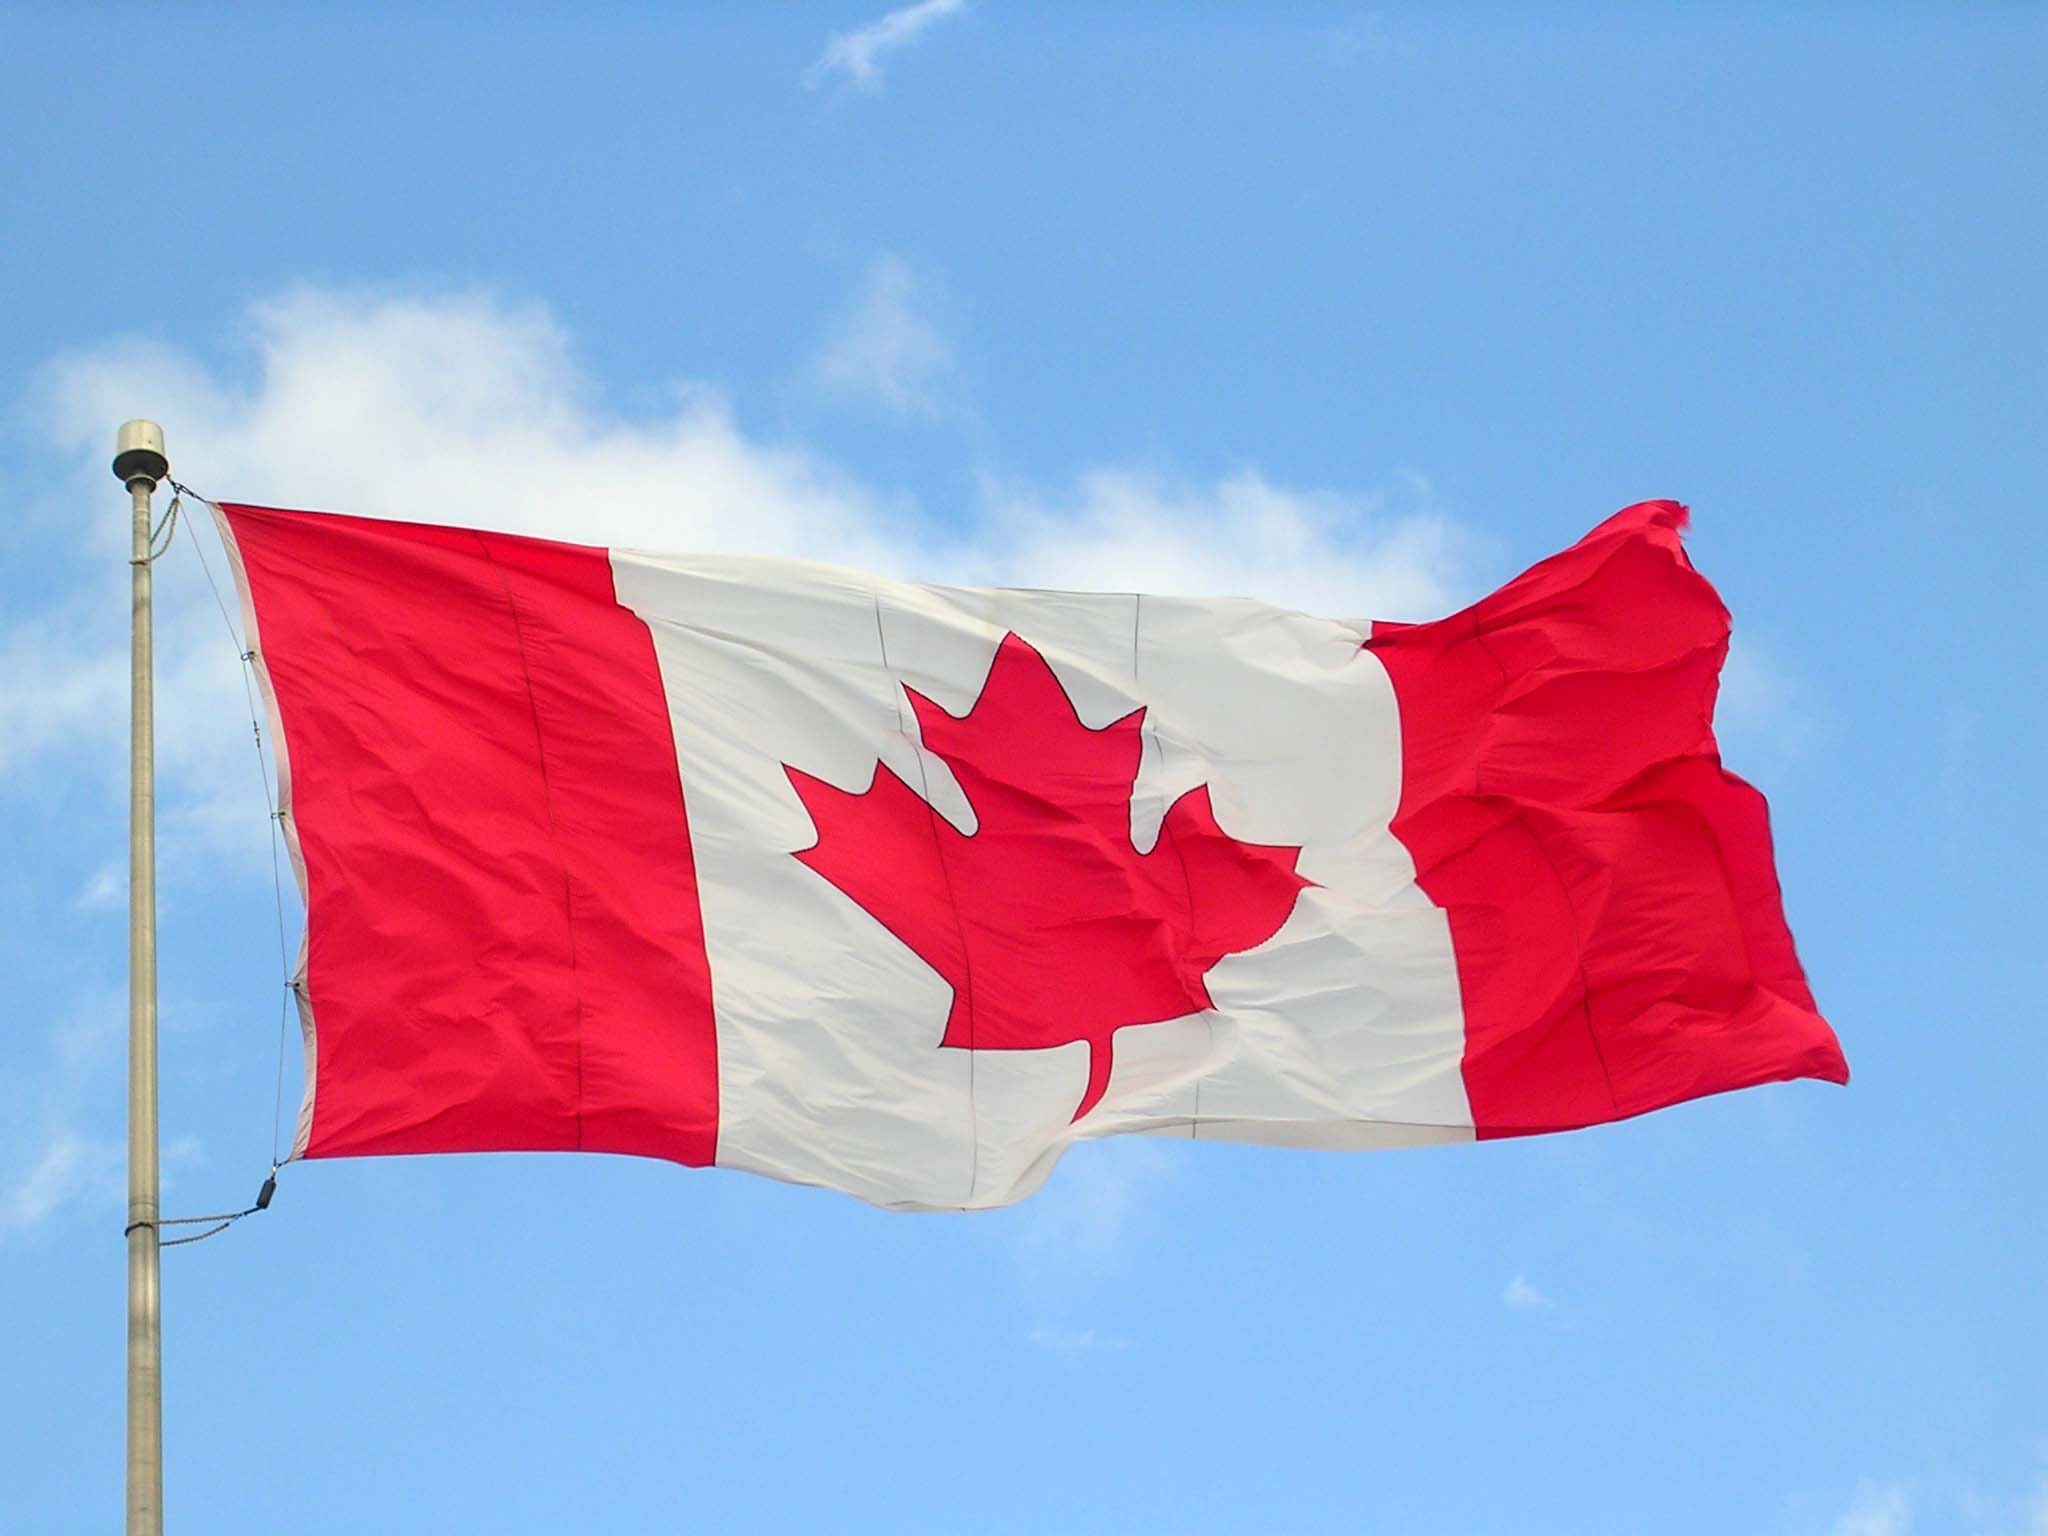 یک جولای، روز تولد کشور کانادا